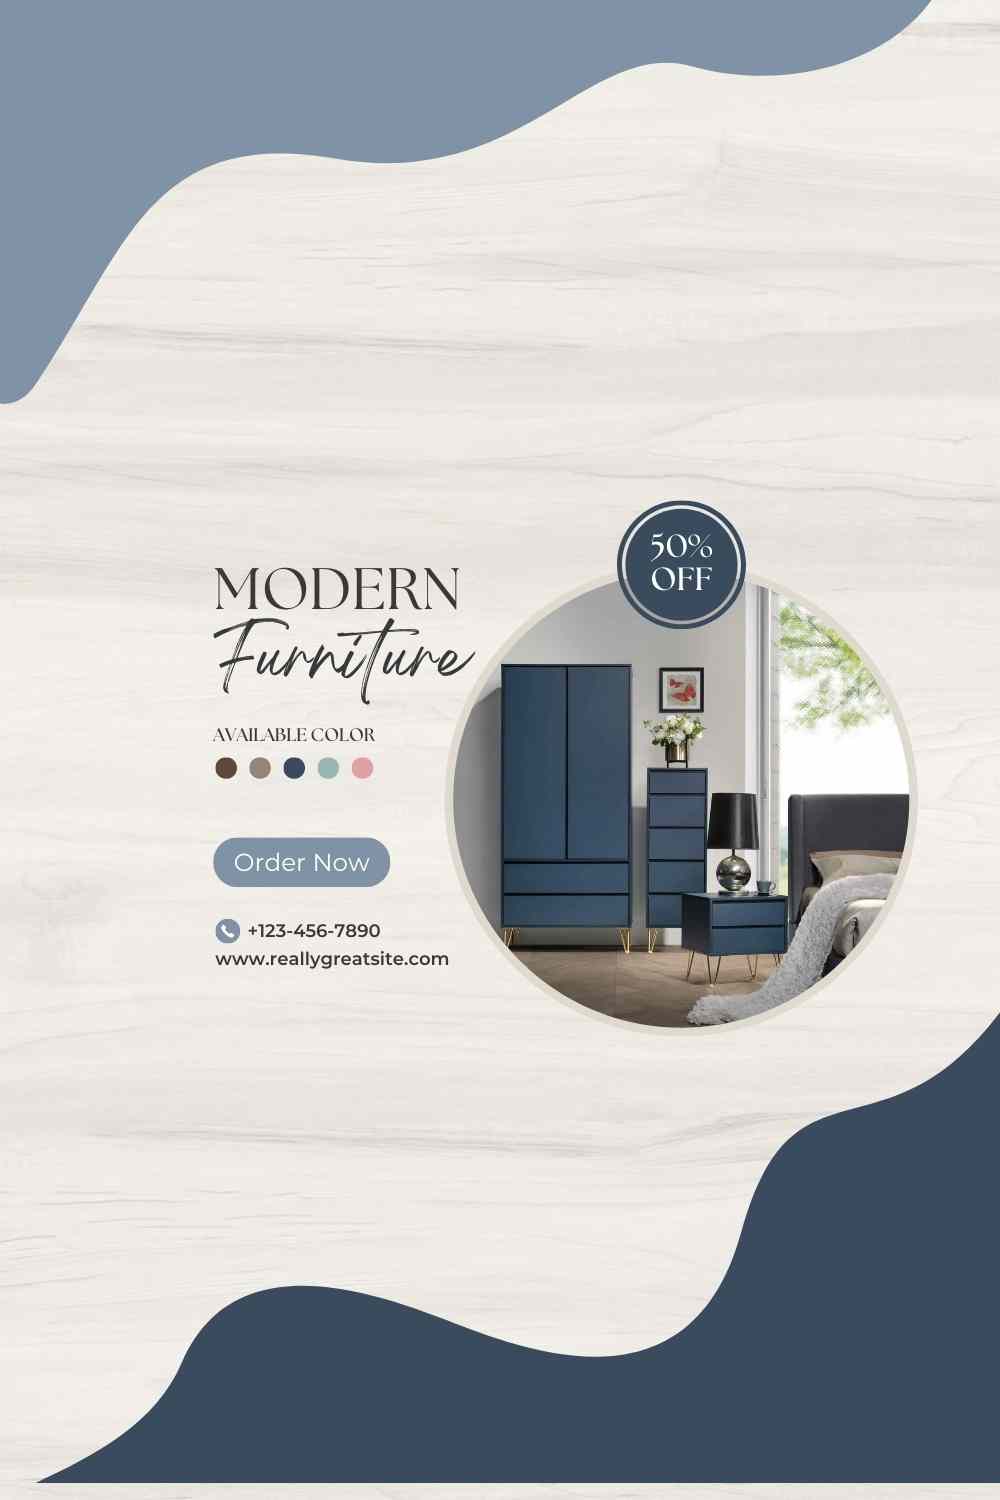 Instagram design template showcasing modern furniture pinterest preview image.